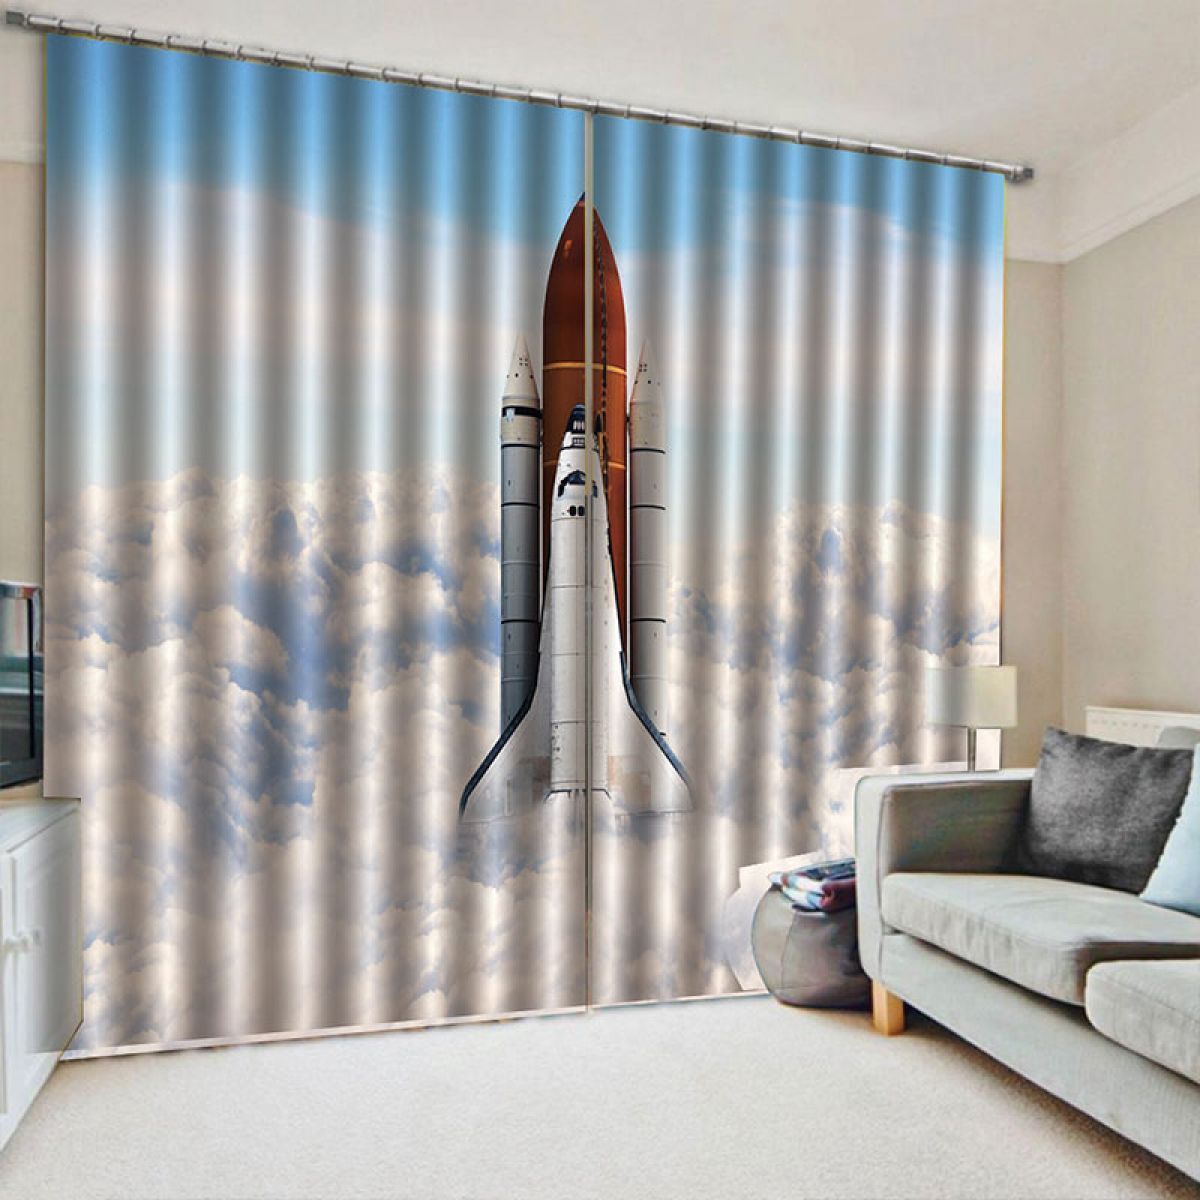 3d rocket flying blue sky printed window curtain home decor 4929